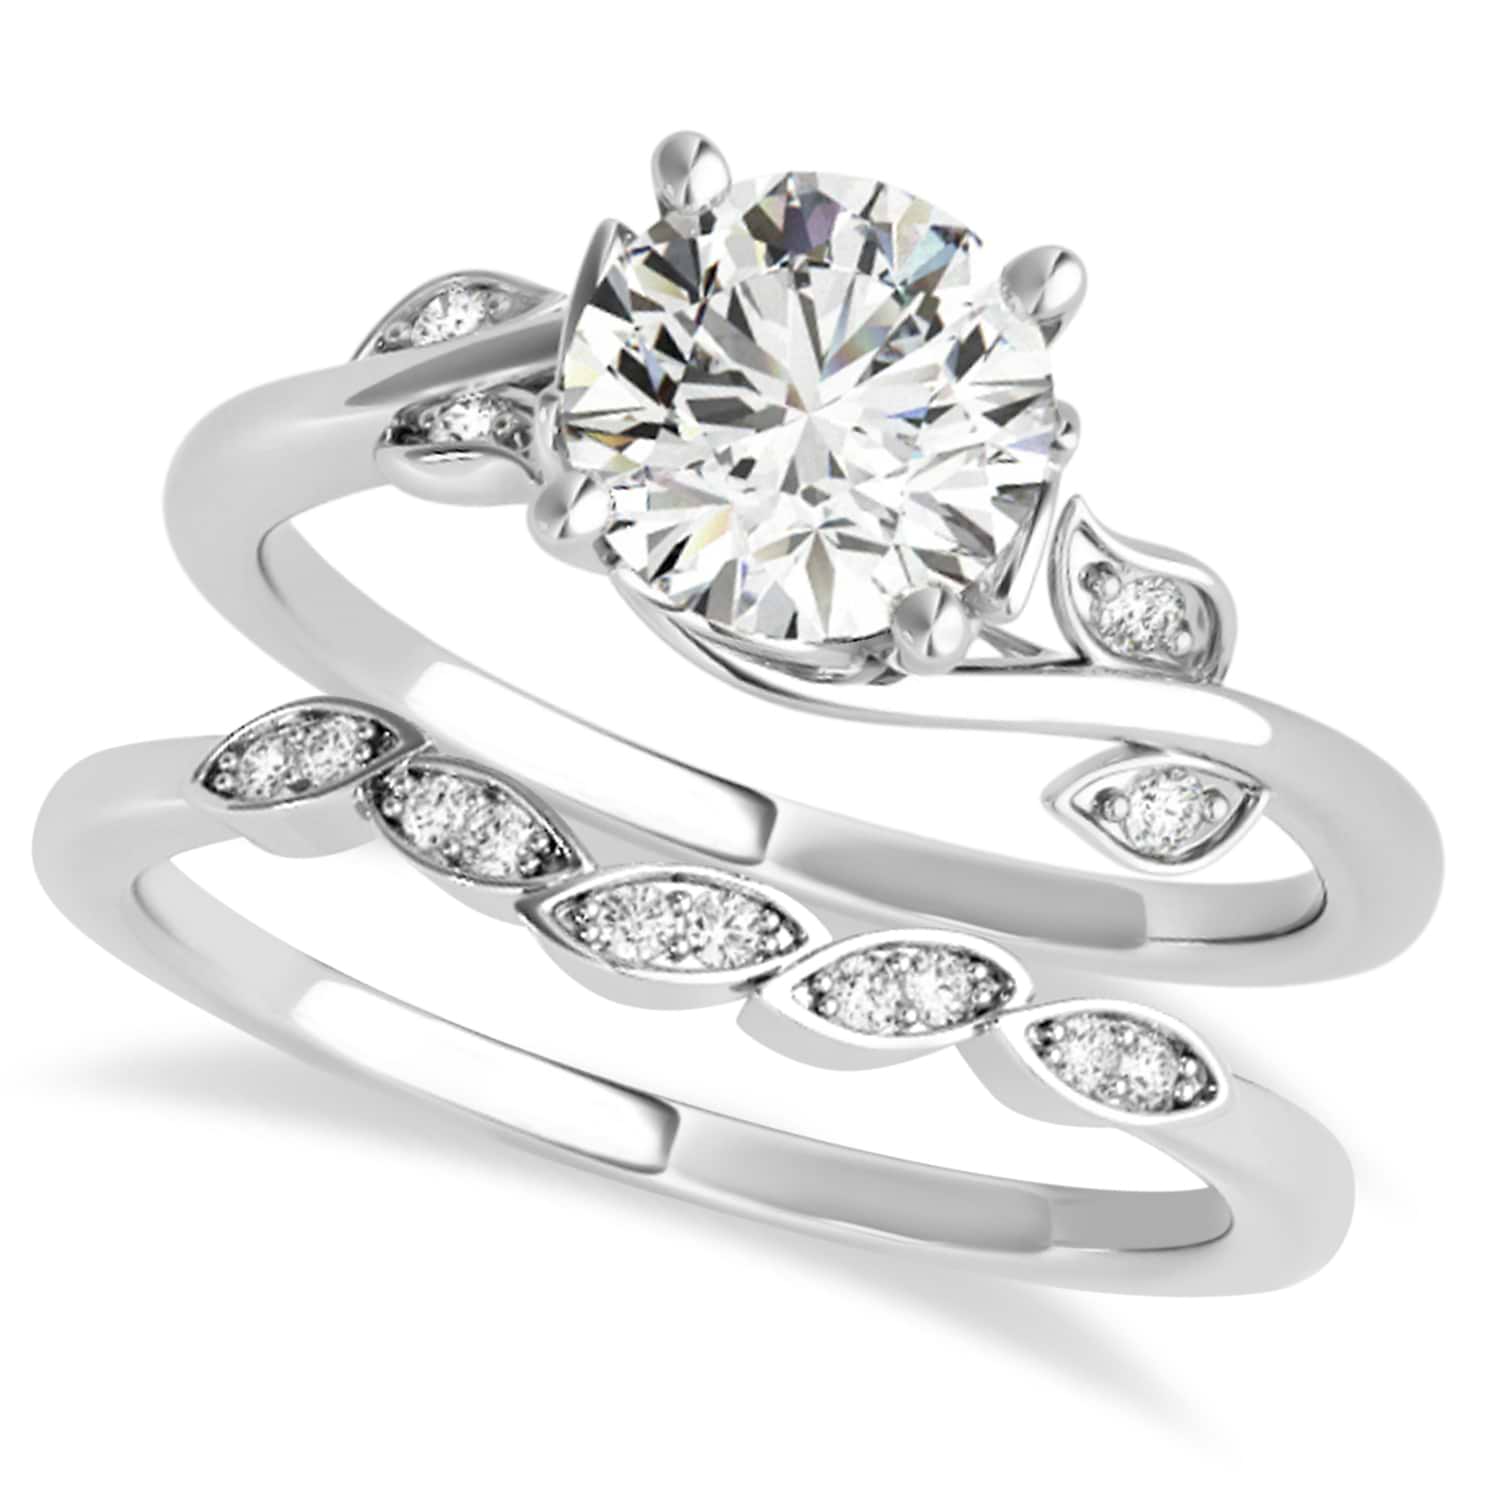 Bypass Floral Diamond Bridal Set Setting Platinum (0.80ct)